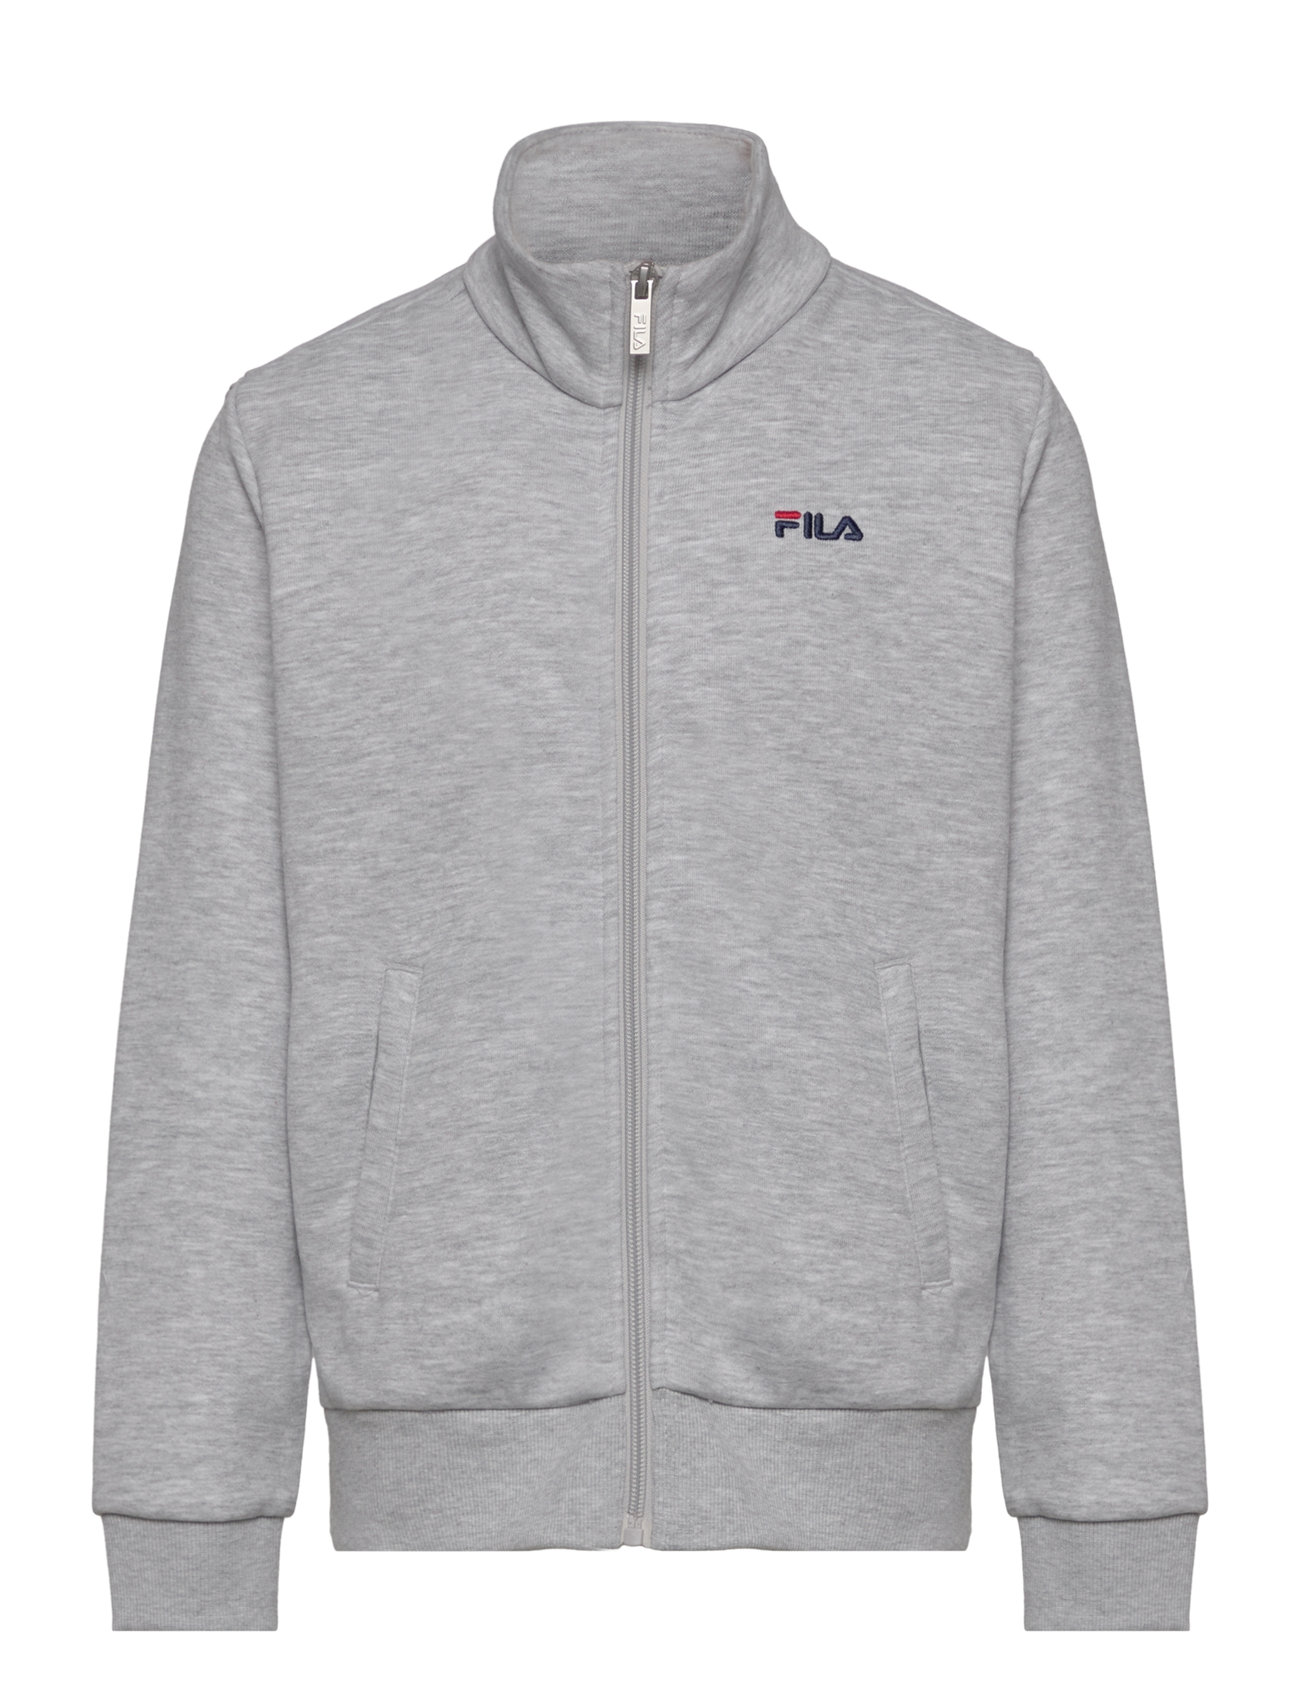 Blankenhagen Graphic Track Jacket Sport Sweatshirts & Hoodies Sweatshirts Grey FILA